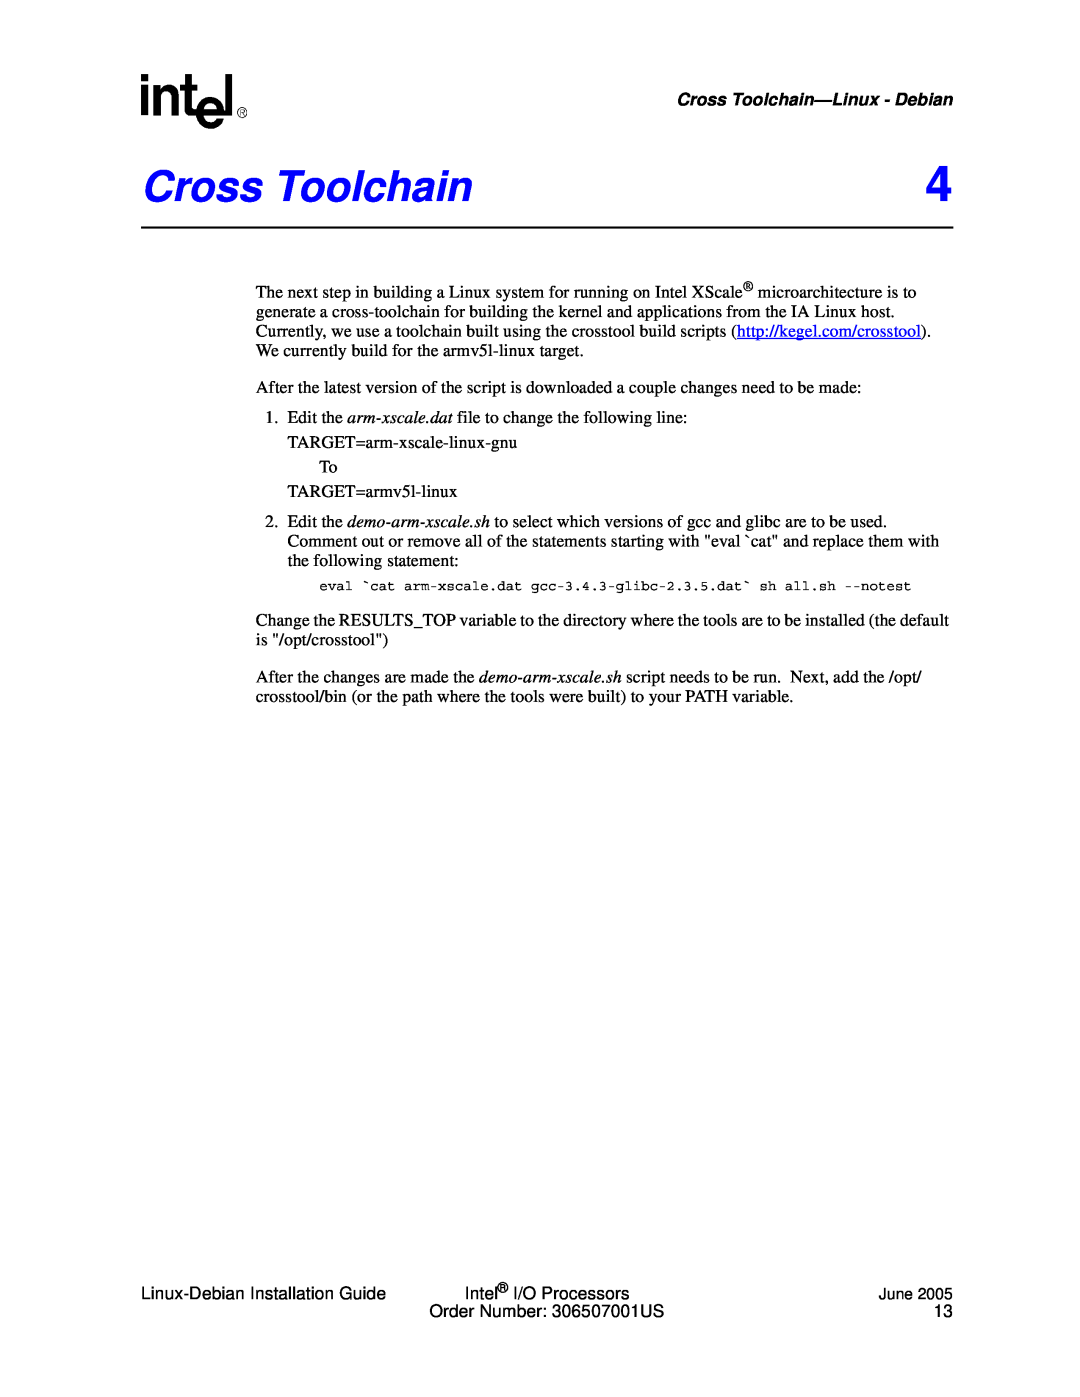 Intel I/O Processor manual Cross Toolchain—Linux- Debian 